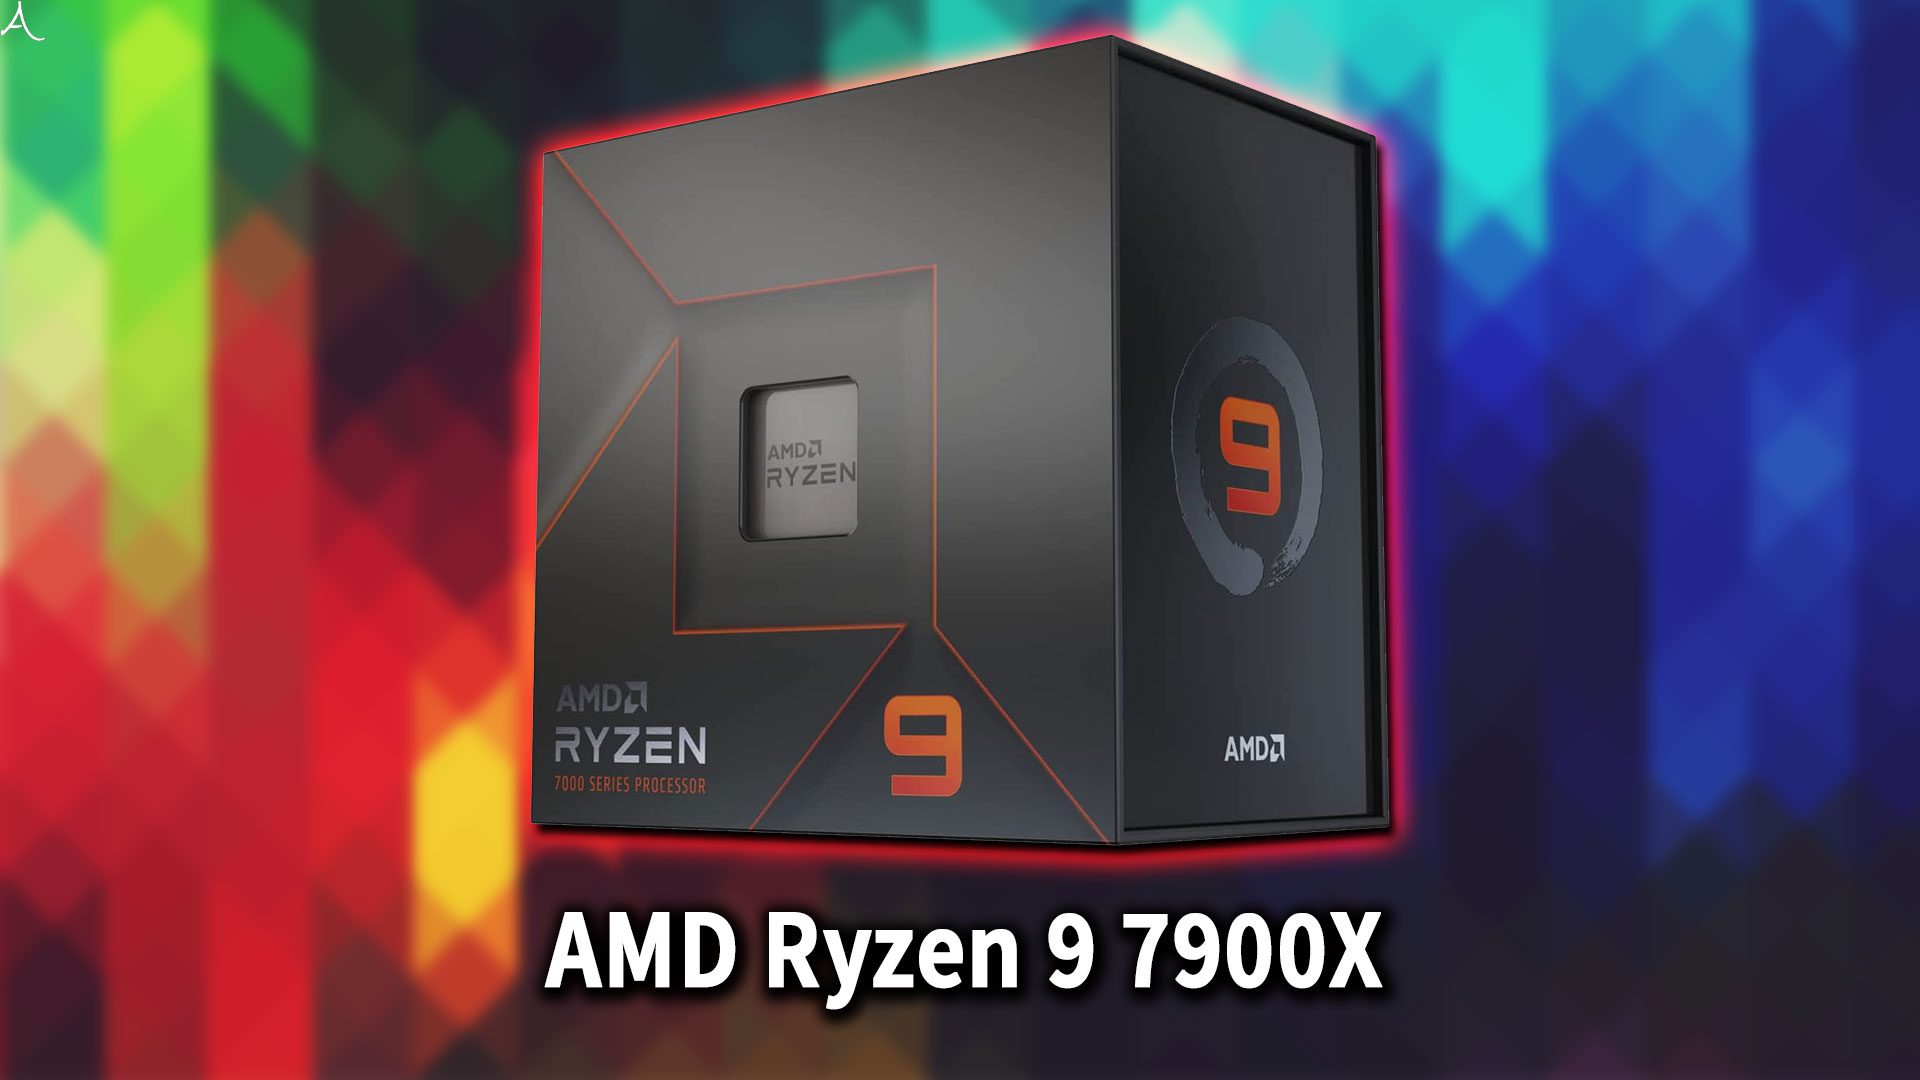 ｢Ryzen 9 7900X｣の消費電力は？おすすめの電源容量はどれくらい？